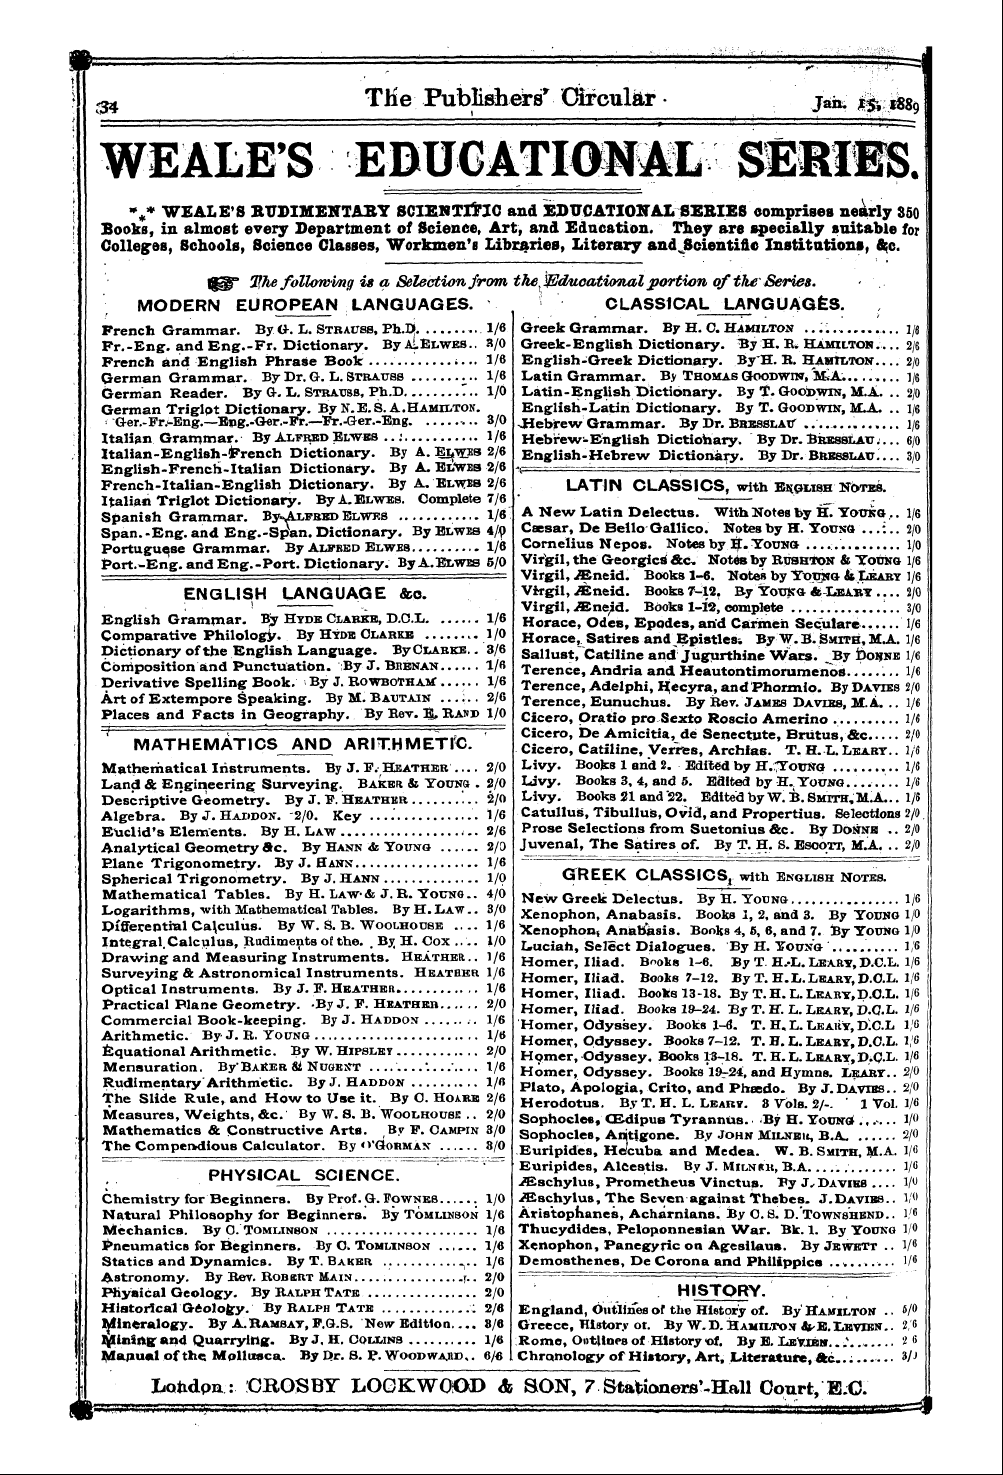 Publishers’ Circular (1880-1890): jS F Y, 1st edition - Ad03601